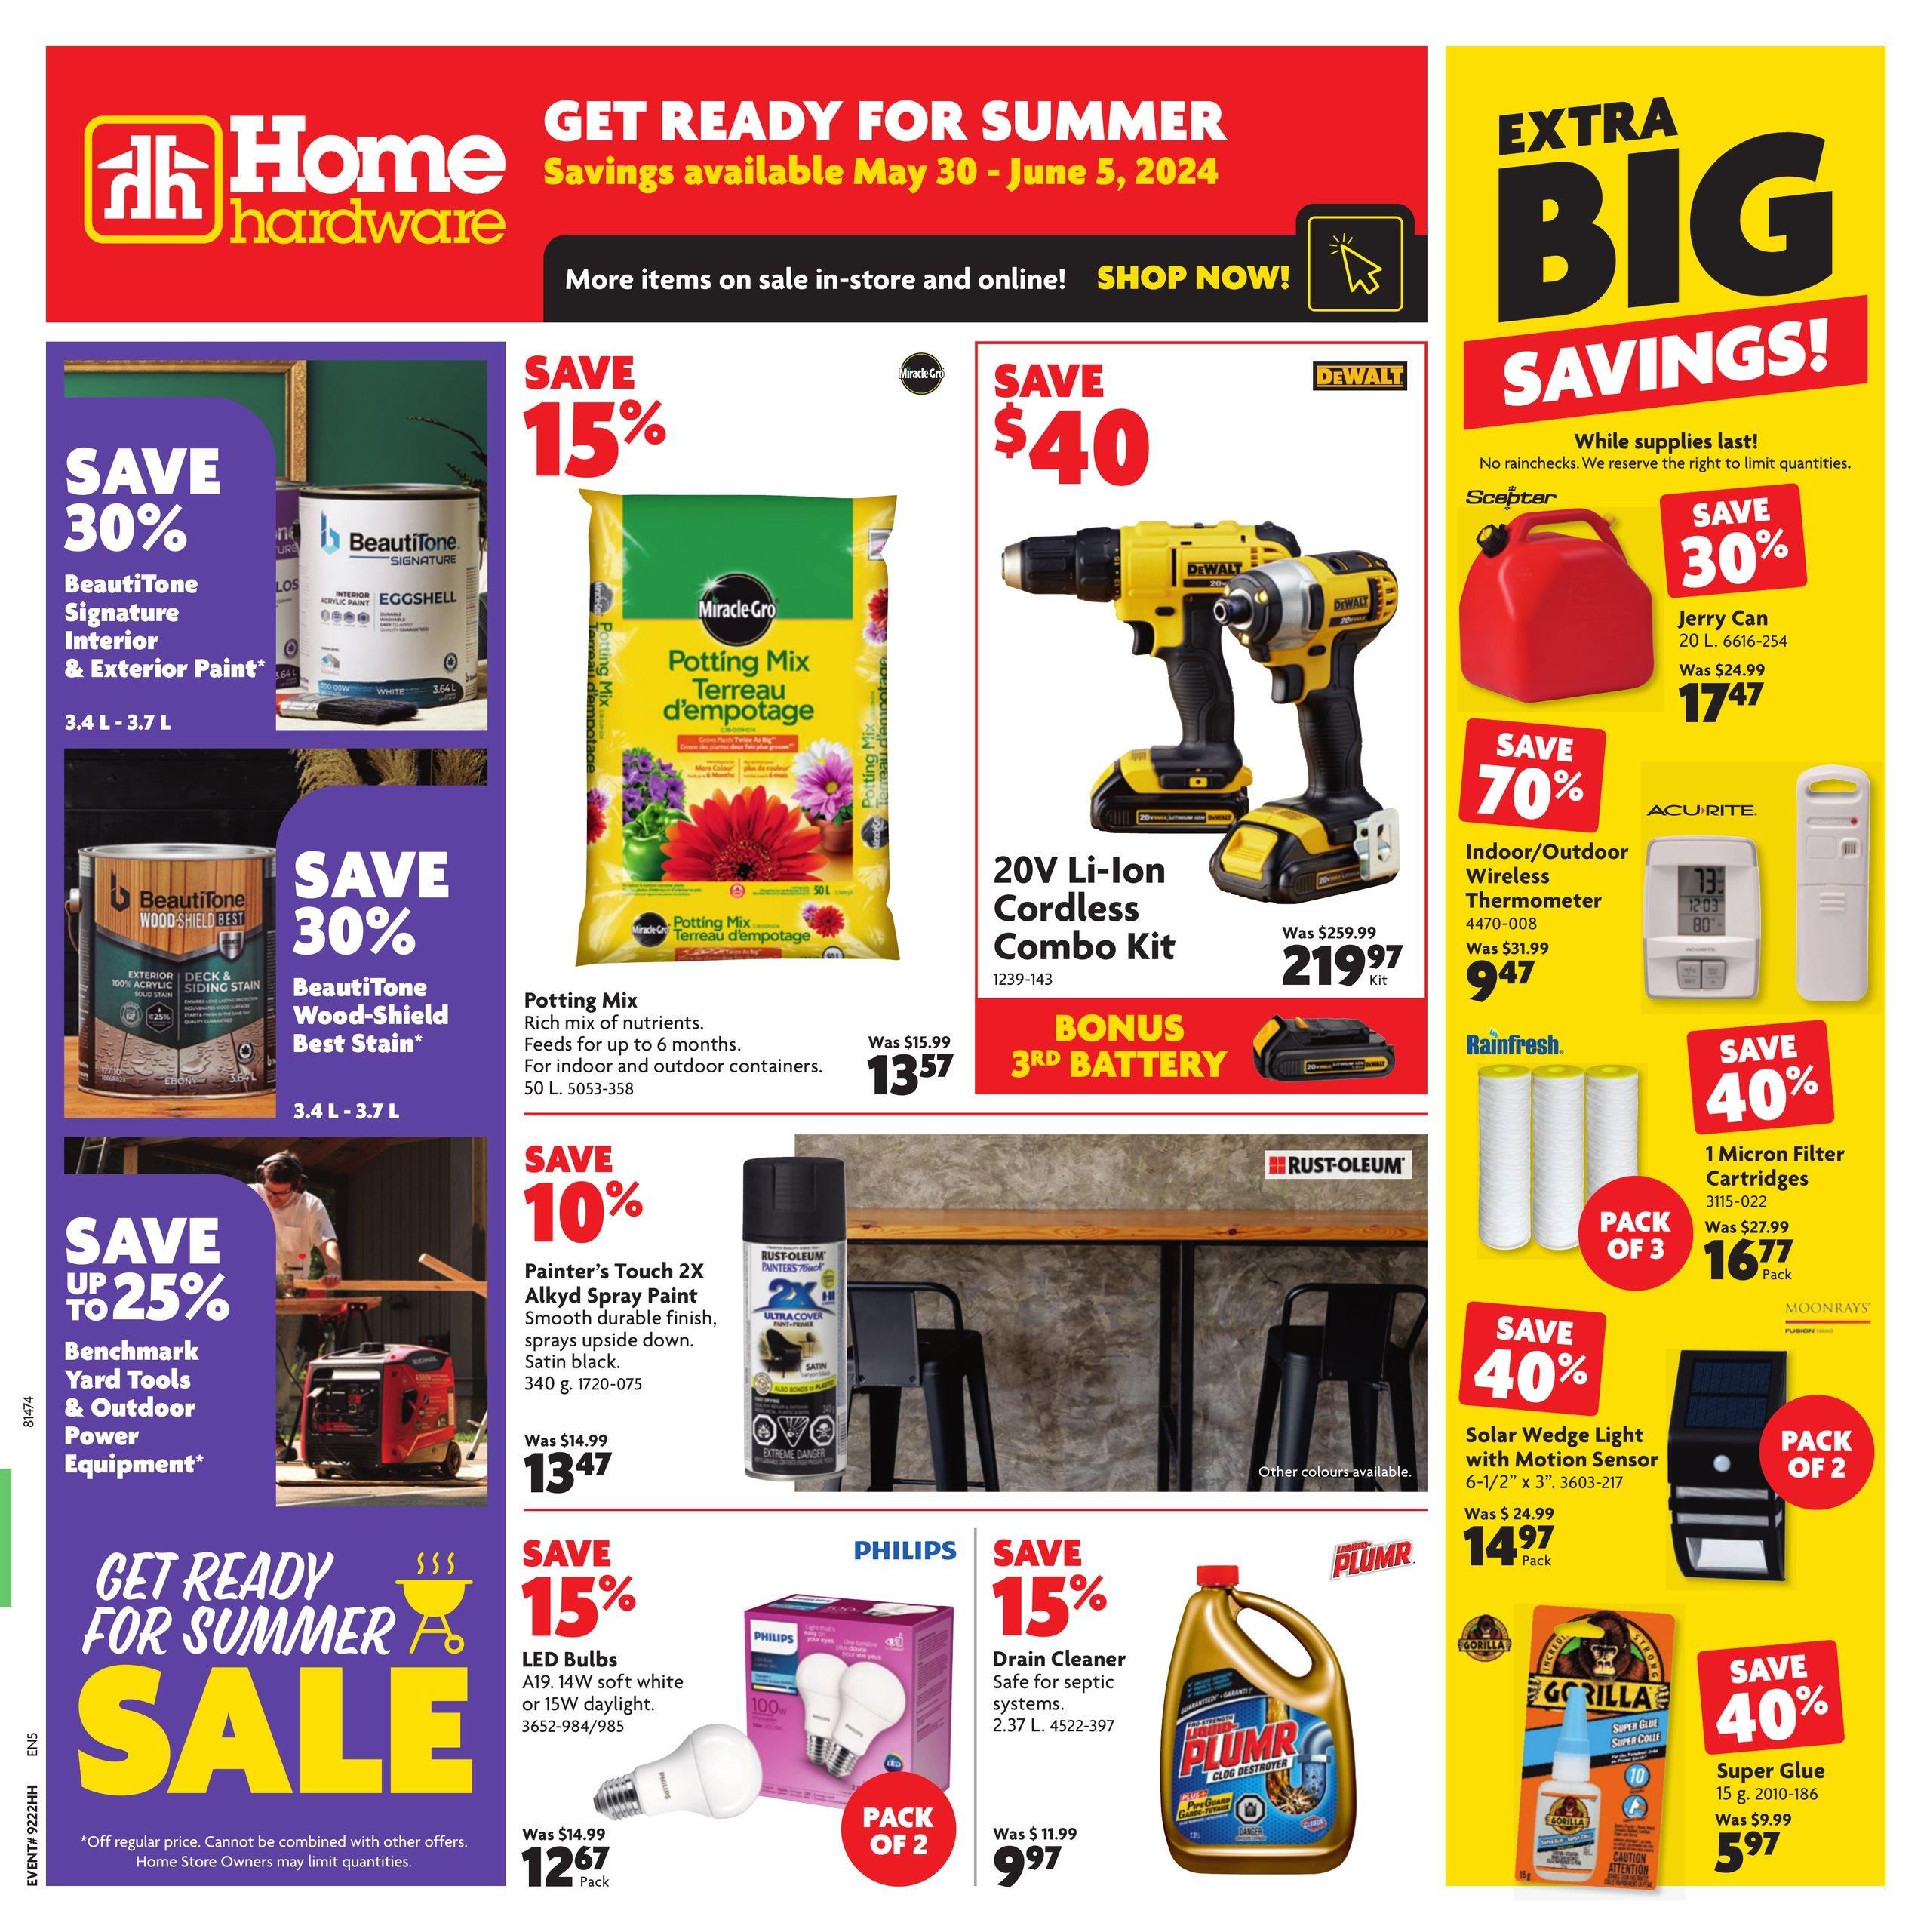 Home Hardware - British Columbia - Weekly Flyer Specials